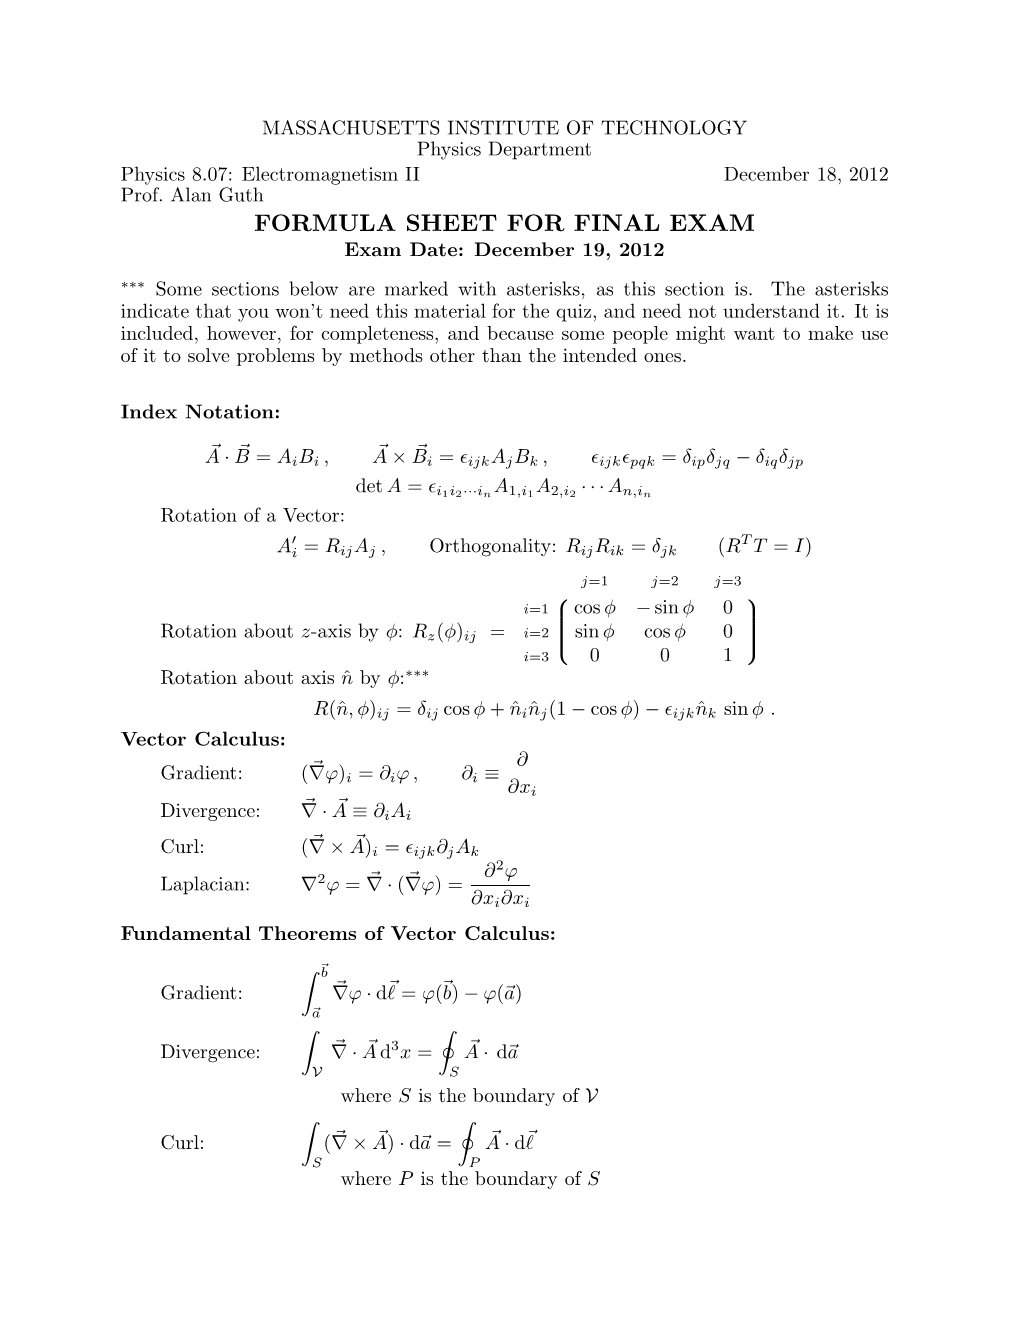 Electromagnetism II, Final Formula Sheet